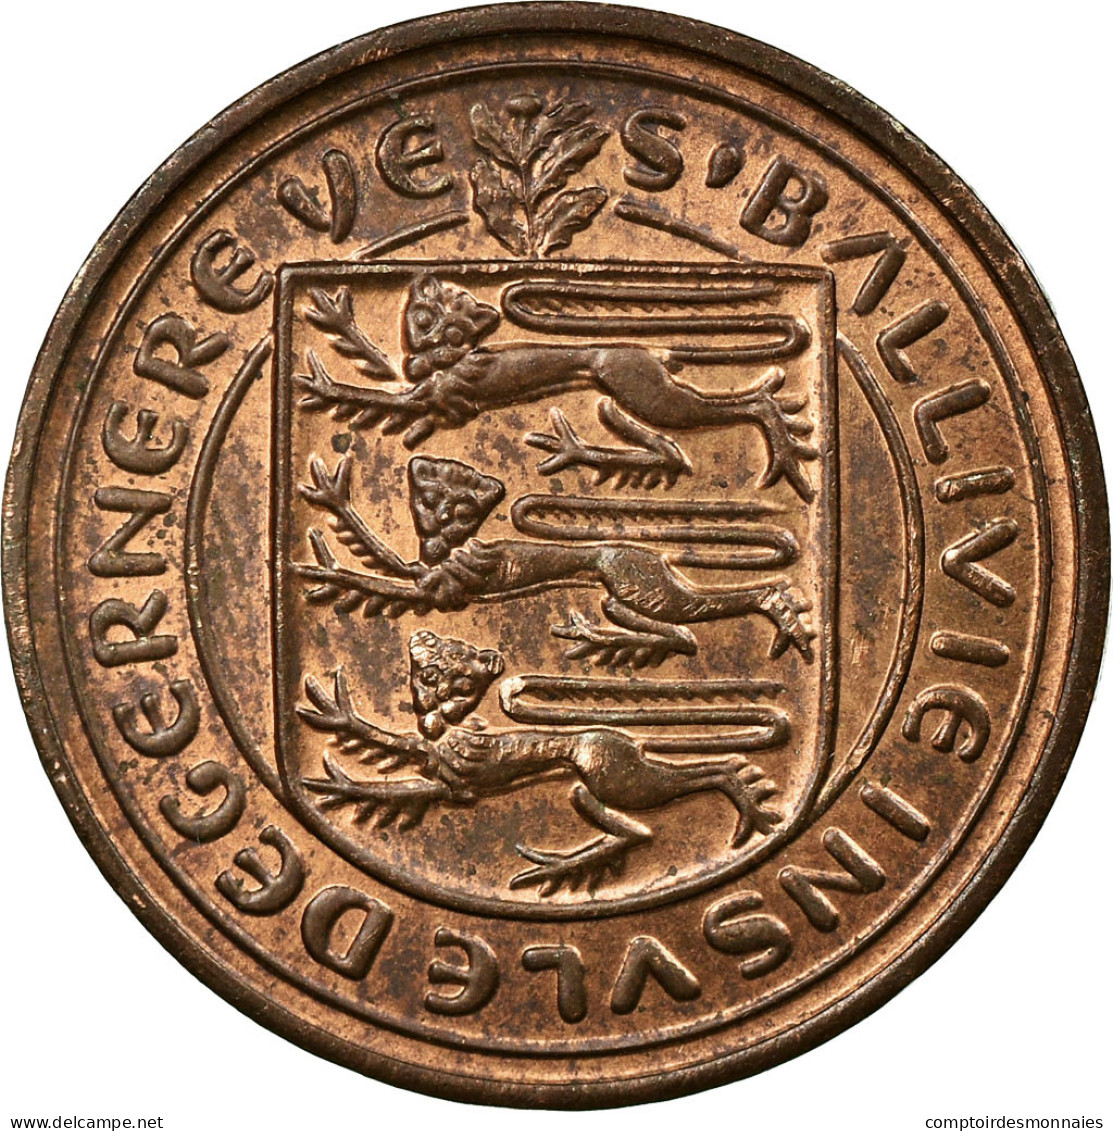 Monnaie, Guernsey, Elizabeth II, New Penny, 1971, Heaton, TB+, Bronze, KM:21 - Guernesey